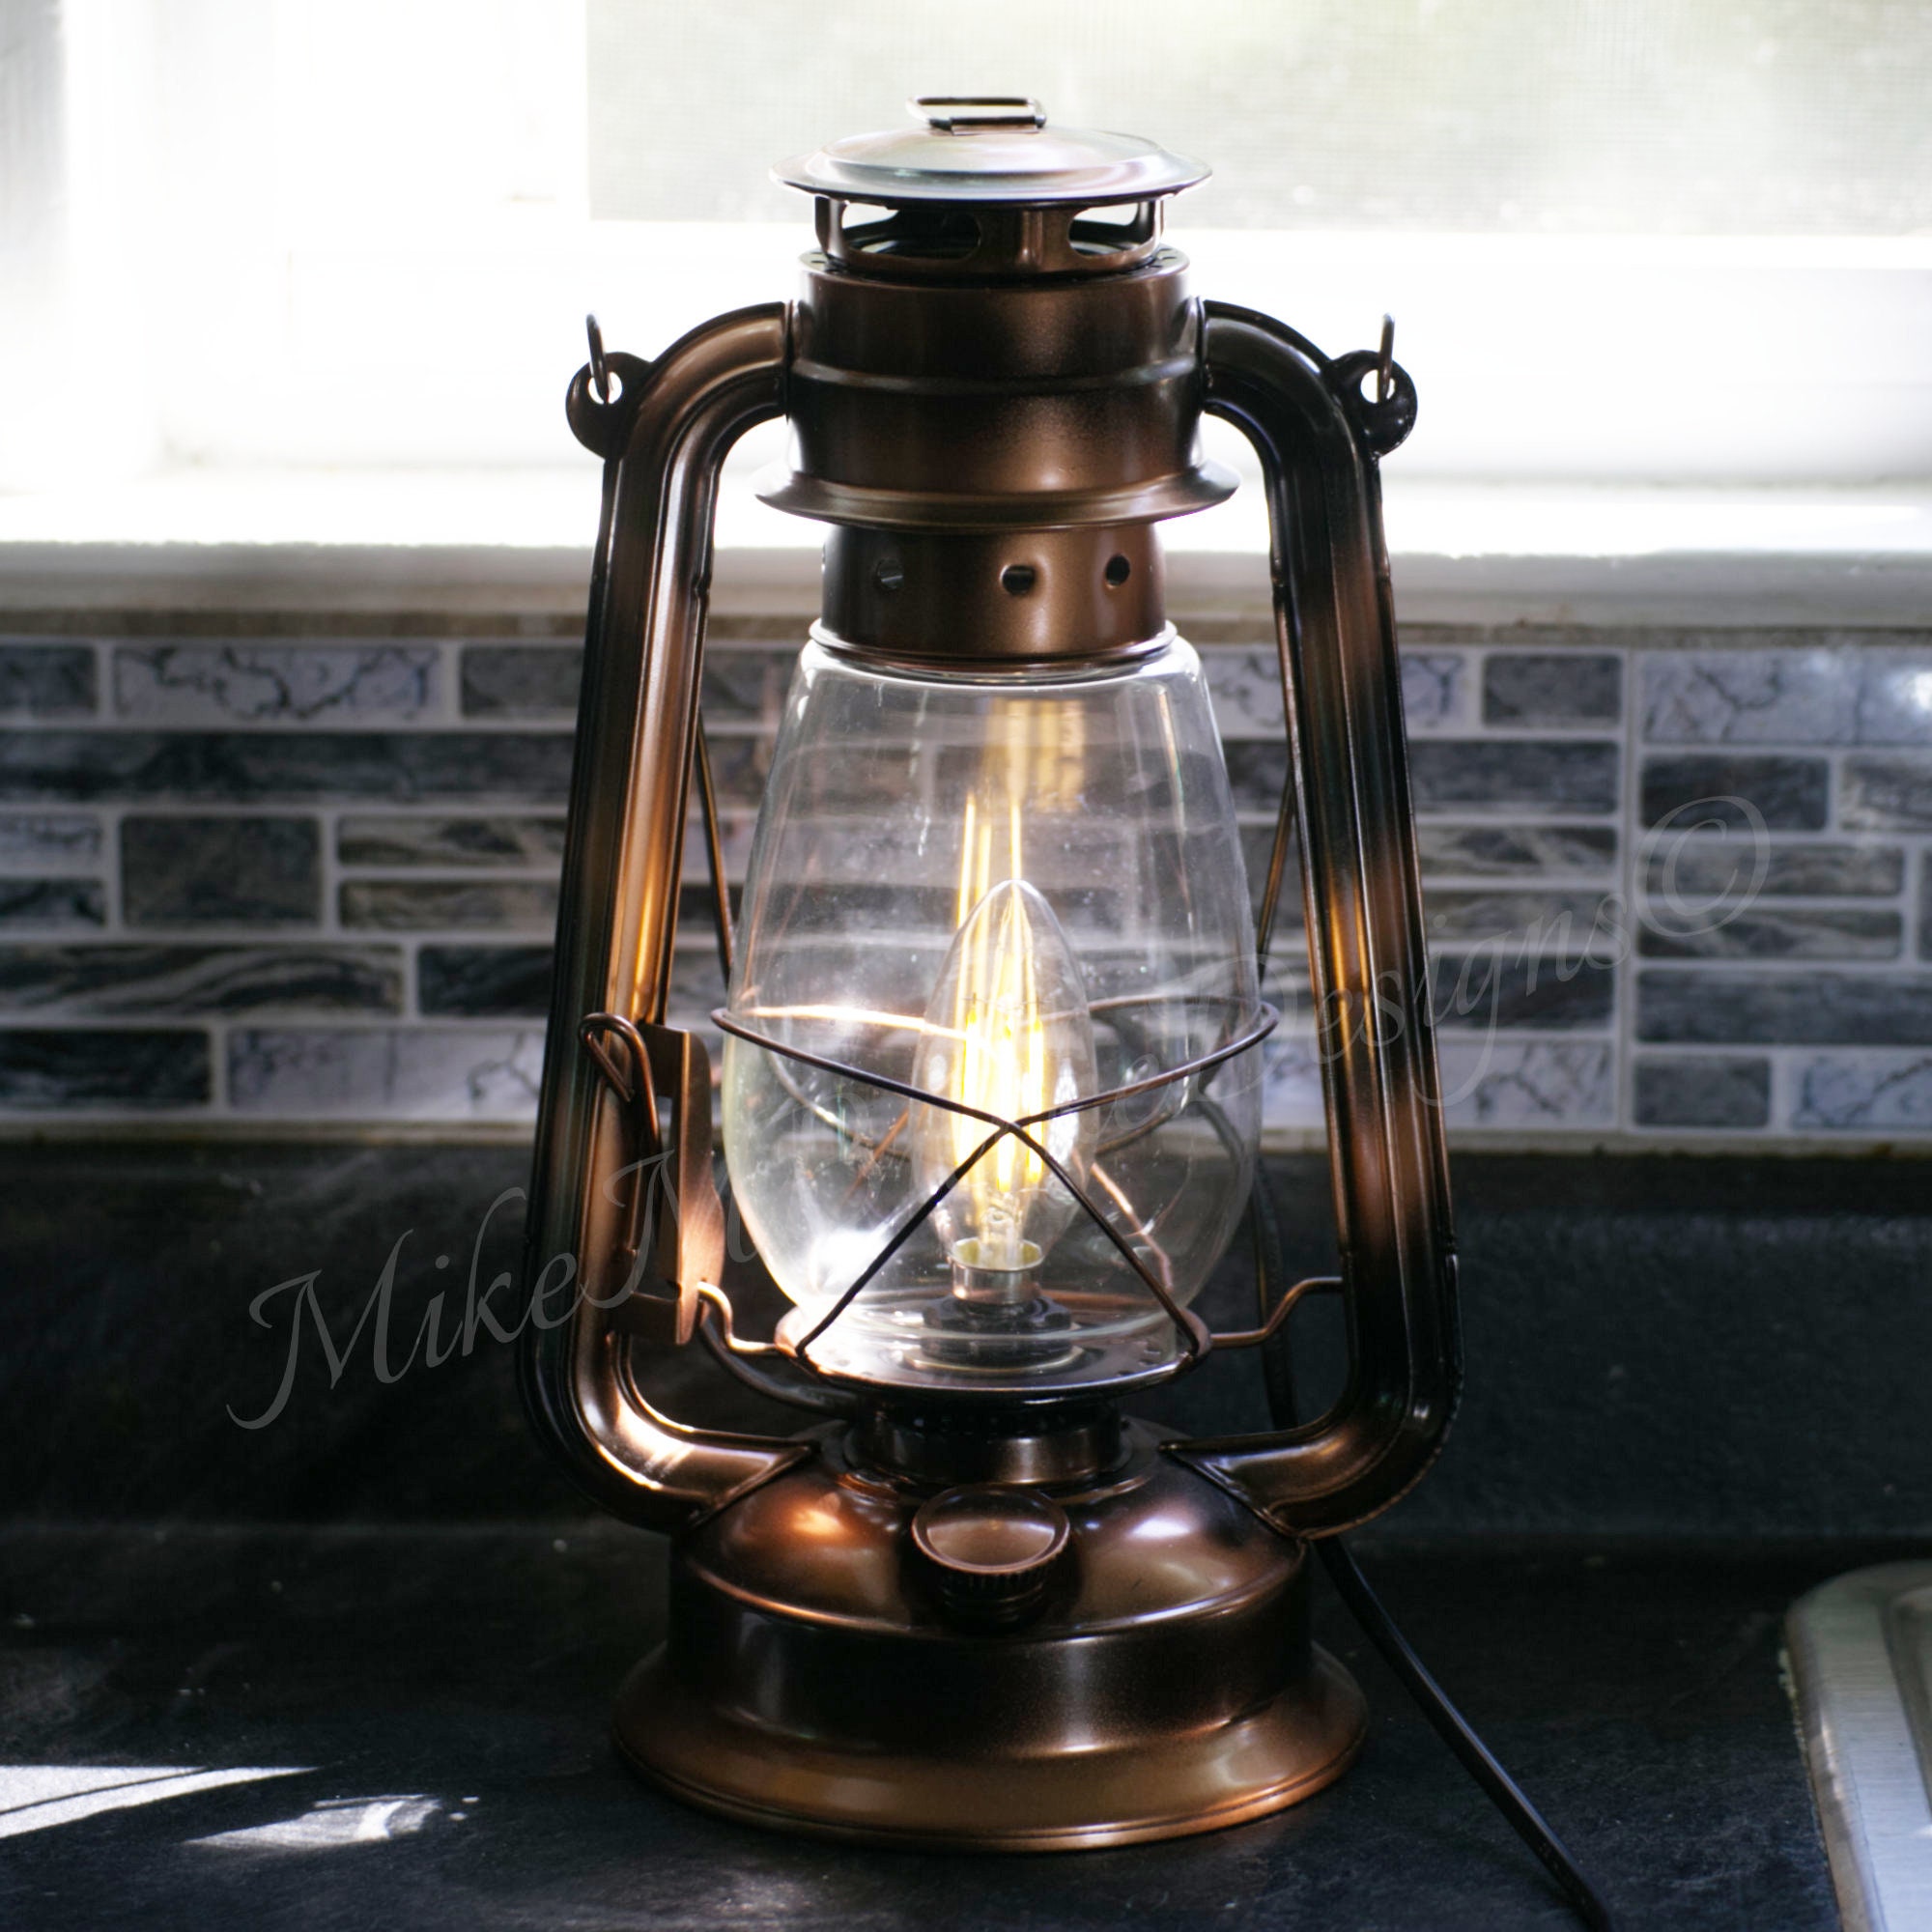 Rustic Lantern Light Electric Lantern Table Lamp ANTIQUED COPPER